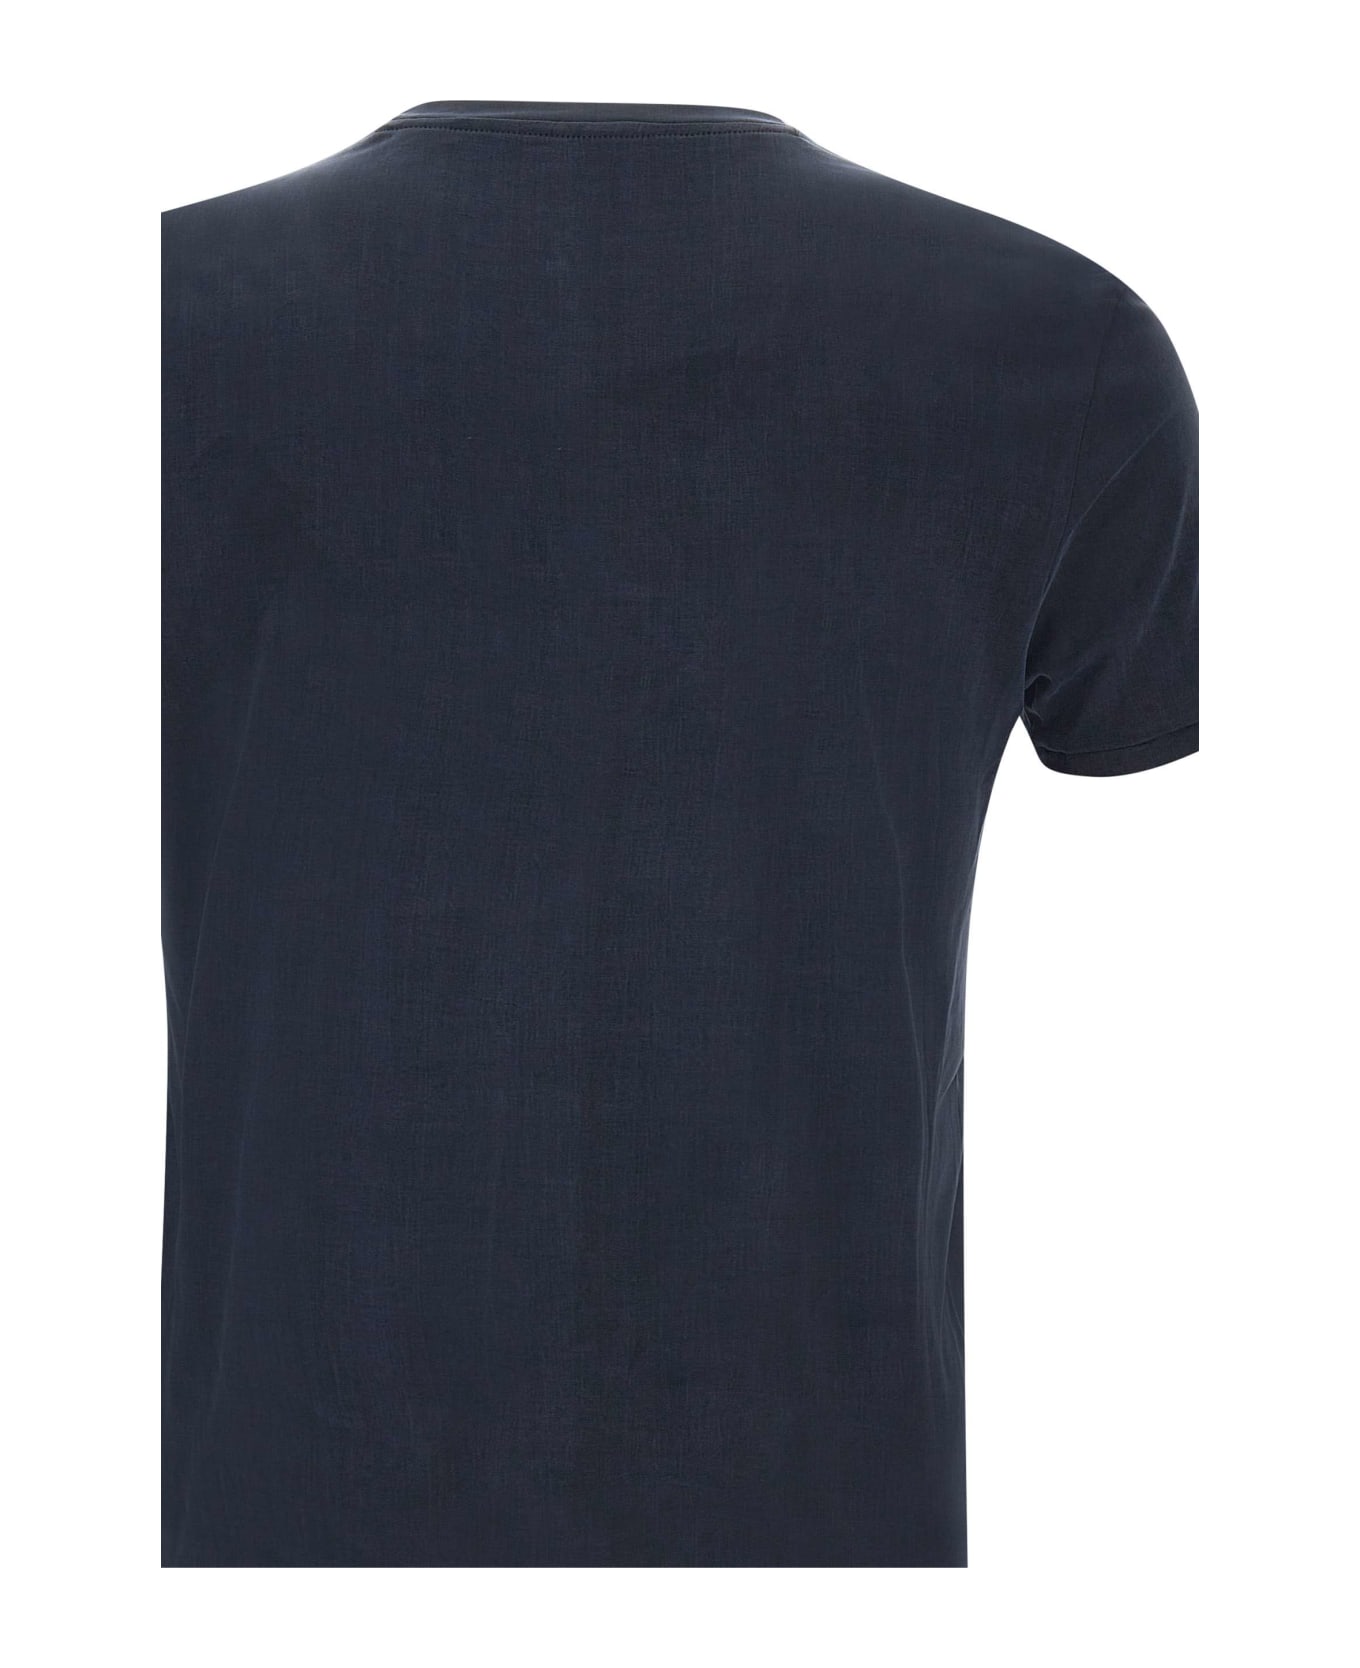 RRD - Roberto Ricci Design 'cupro Shirty' T-shirt - Blue